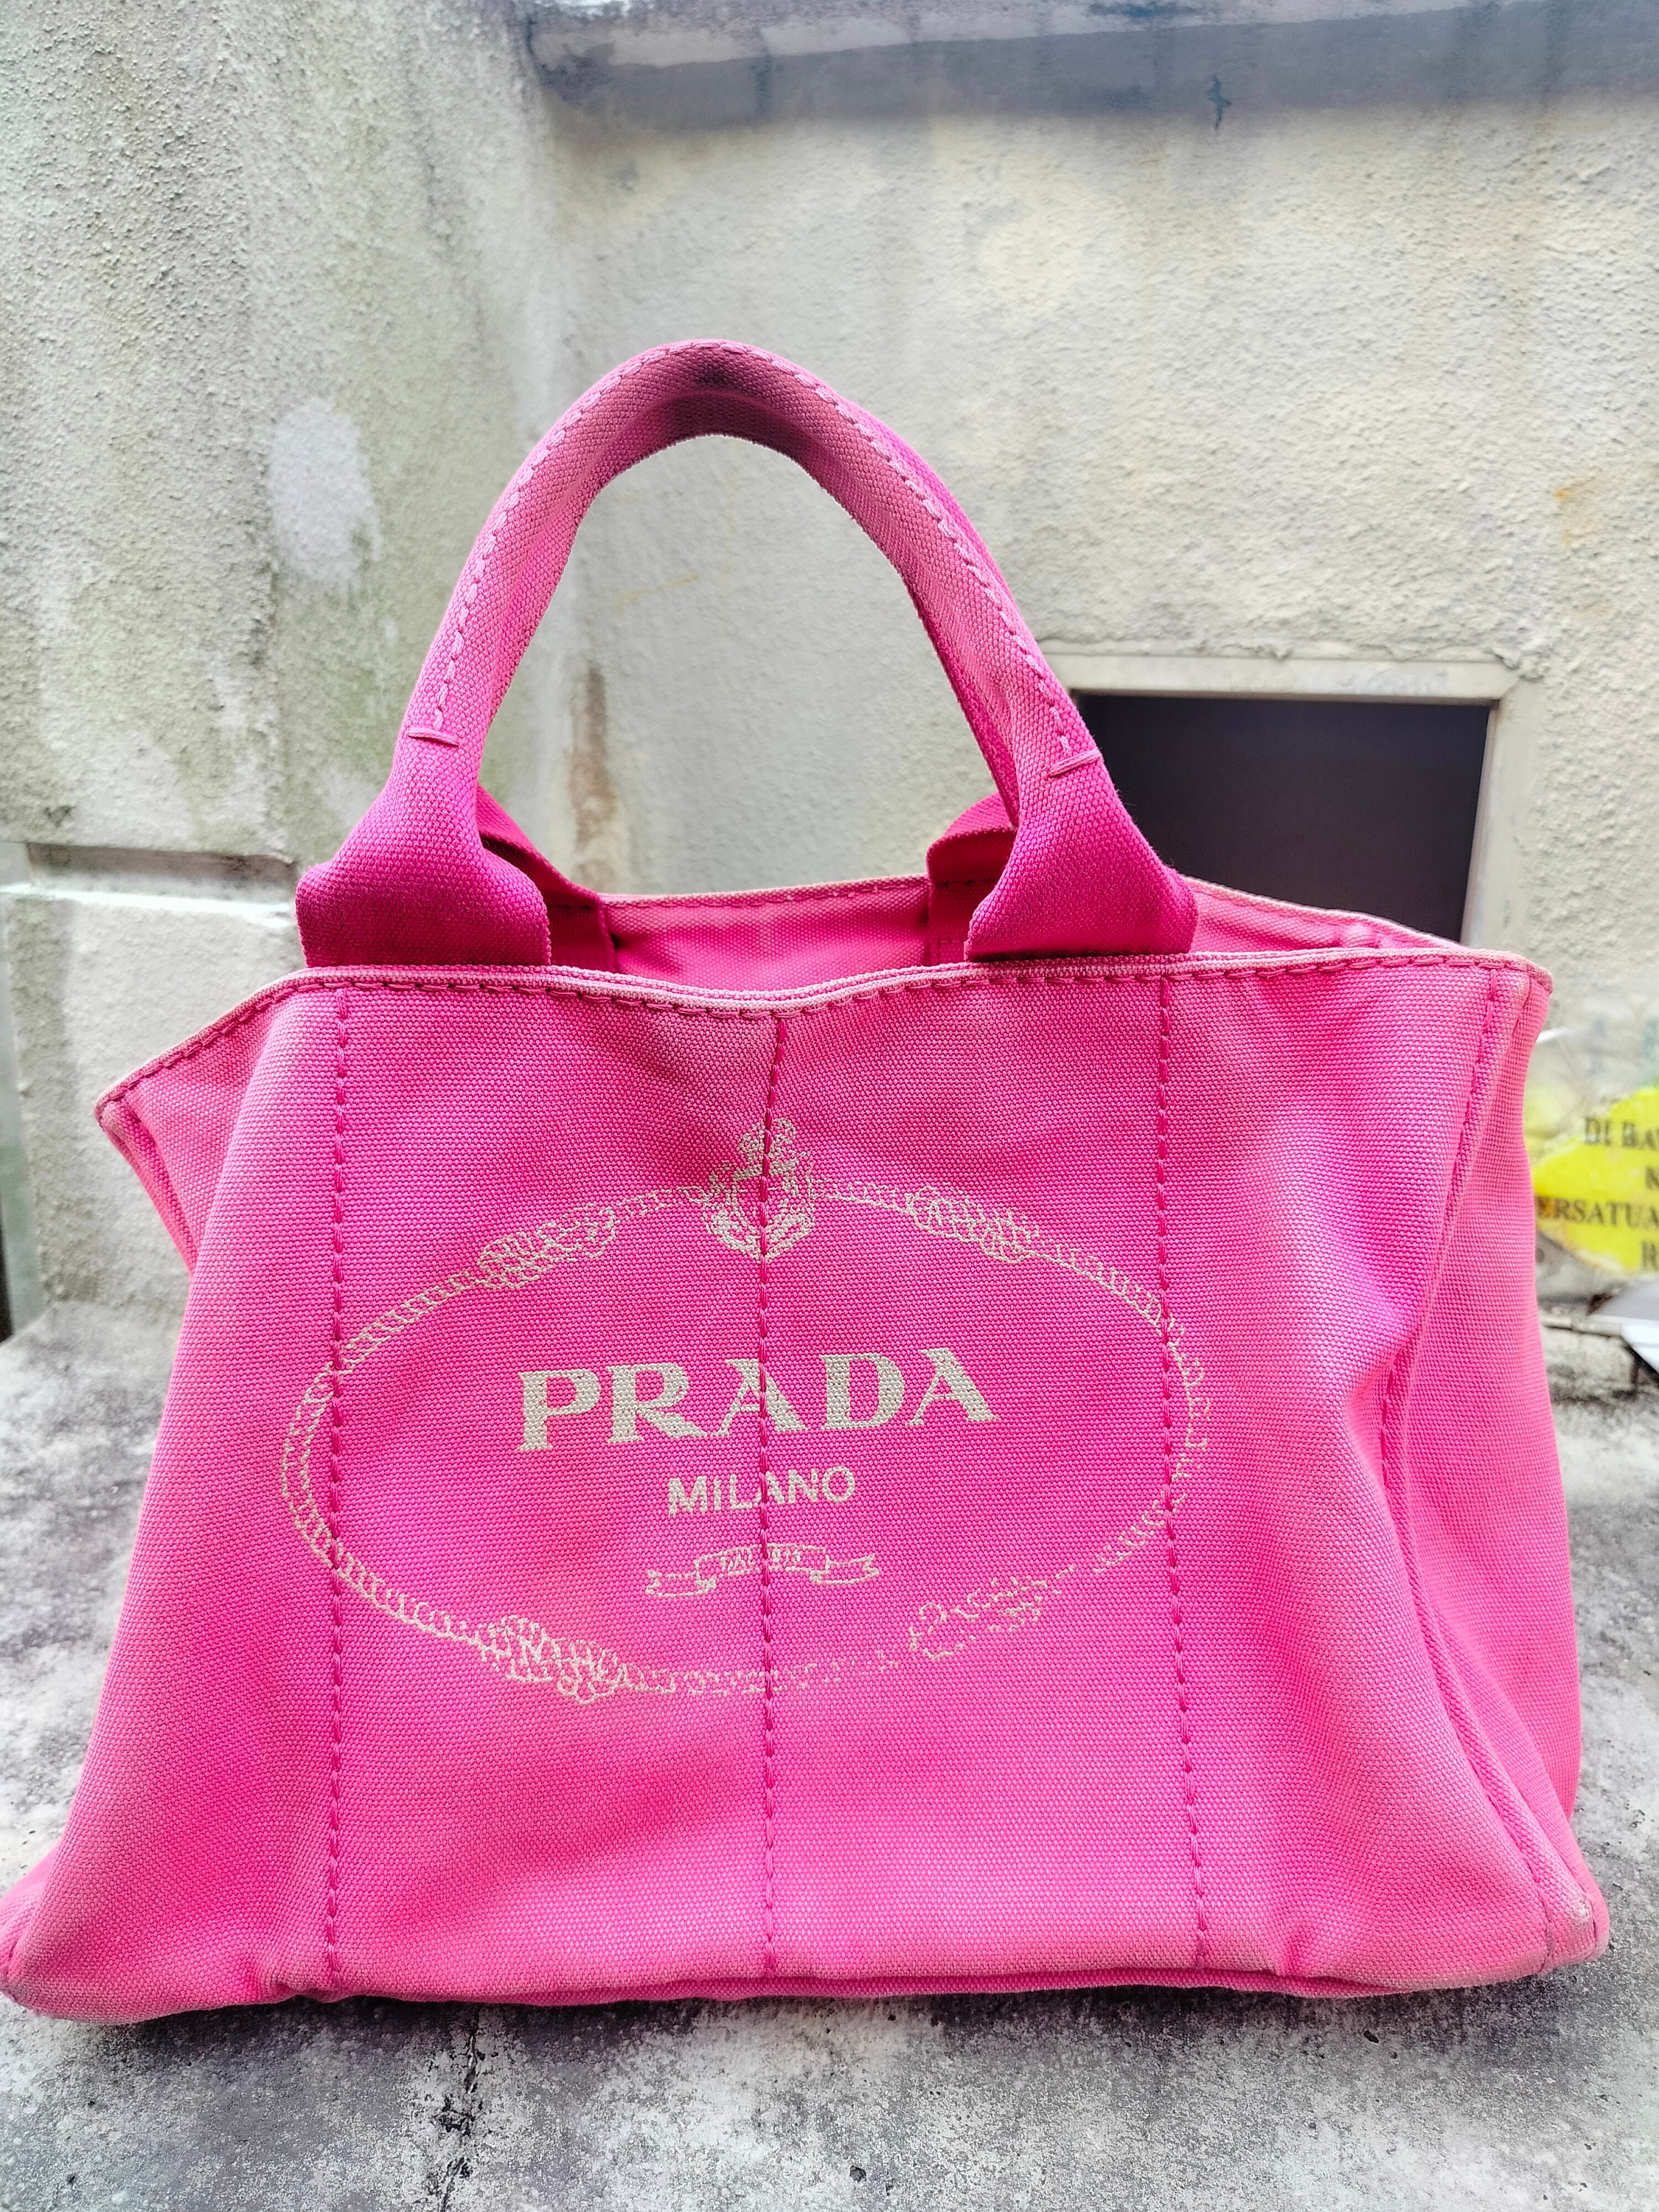 5 luxury bags from Prada to Bottega Veneta that are loved by Karisma  Kapoor, Shanaya Kapoor and more | Vogue India